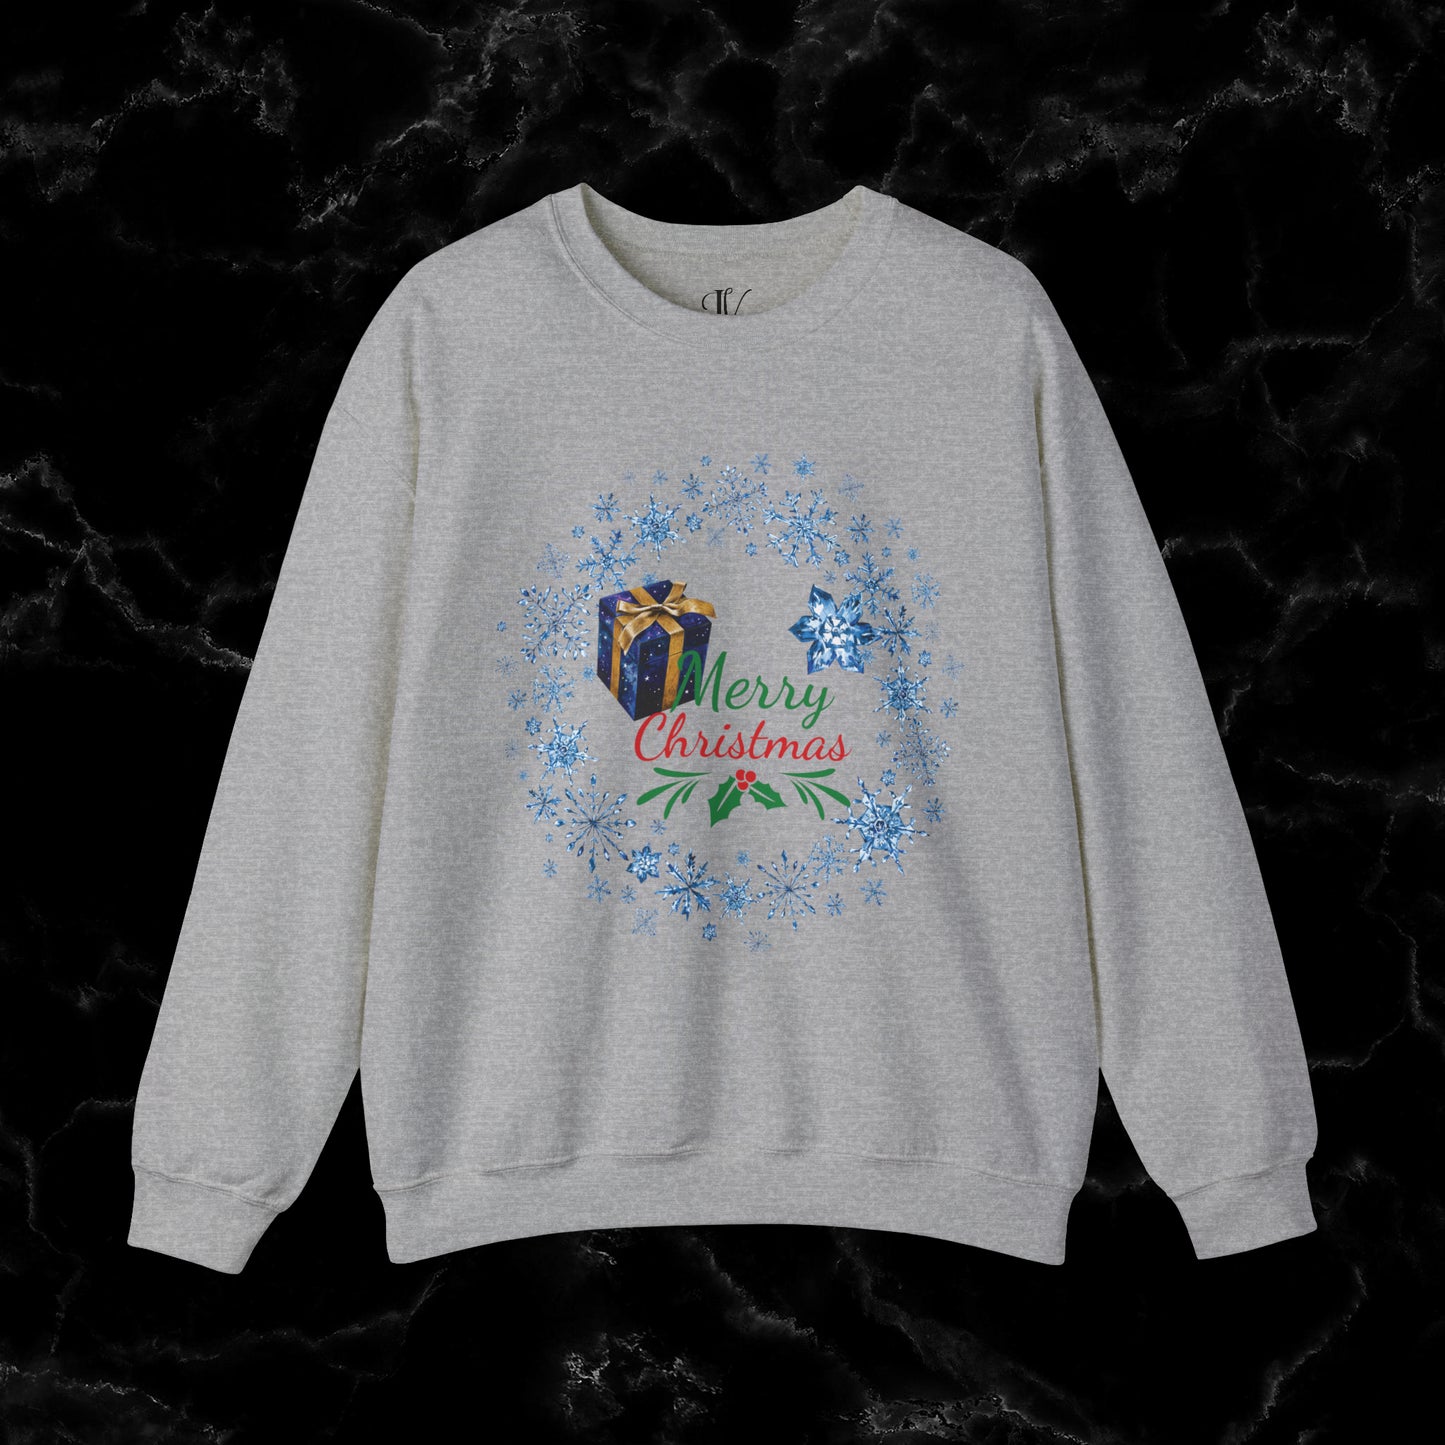 Merry Christmas Sweatshirt - Matching Christmas Shirt, Wreath Design, Holiday Gift Sweatshirt S Sport Grey 